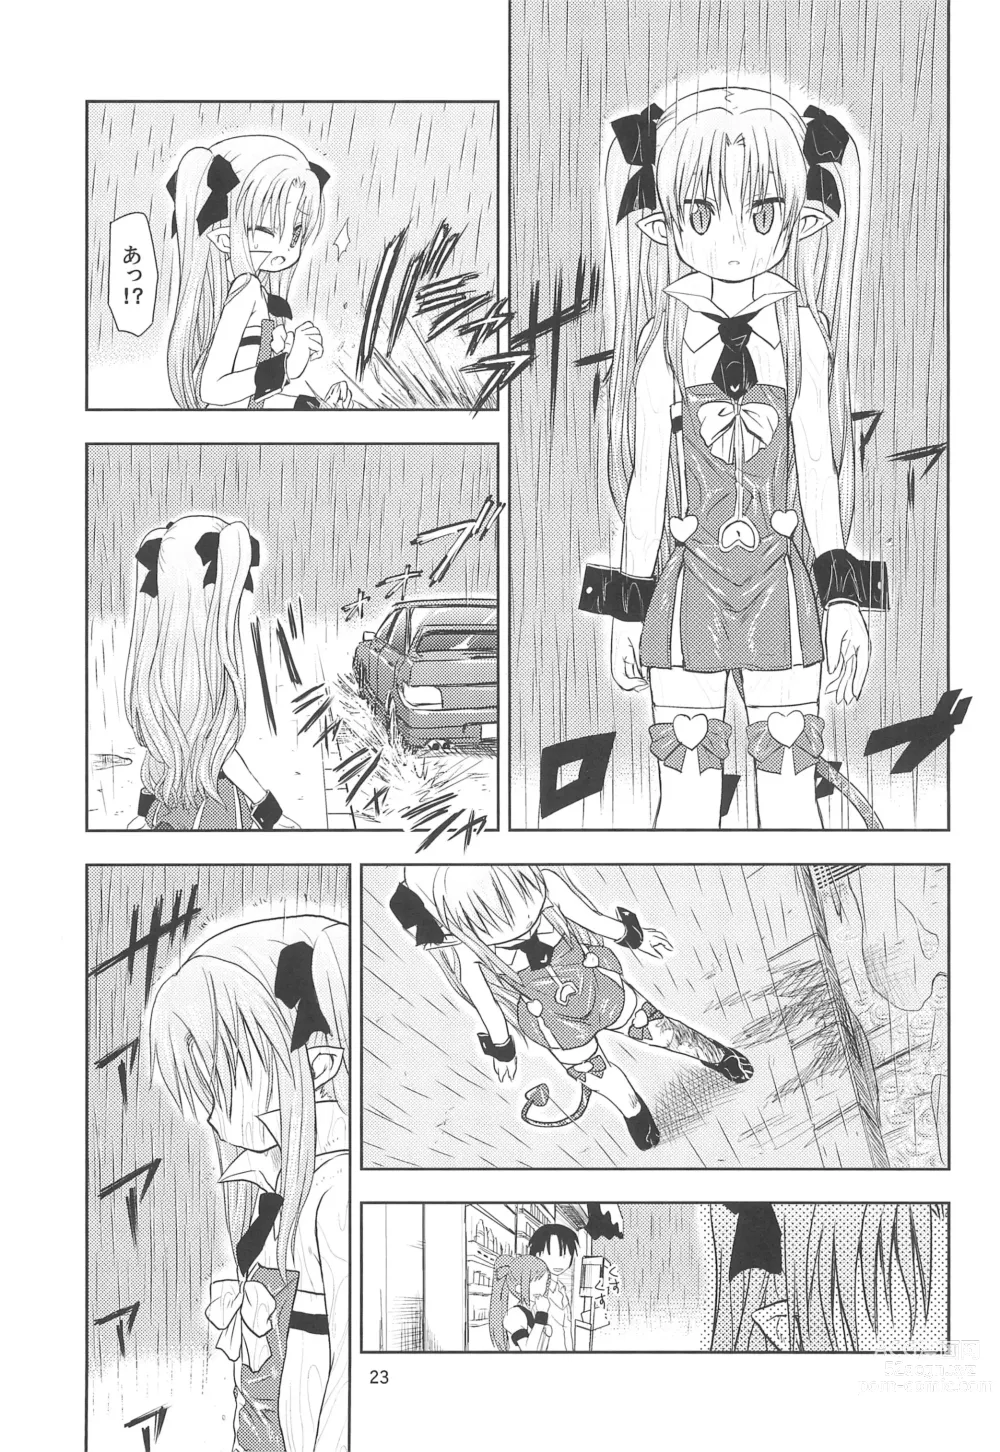 Page 23 of doujinshi Maigo no Maigo no Hime-sama Plus